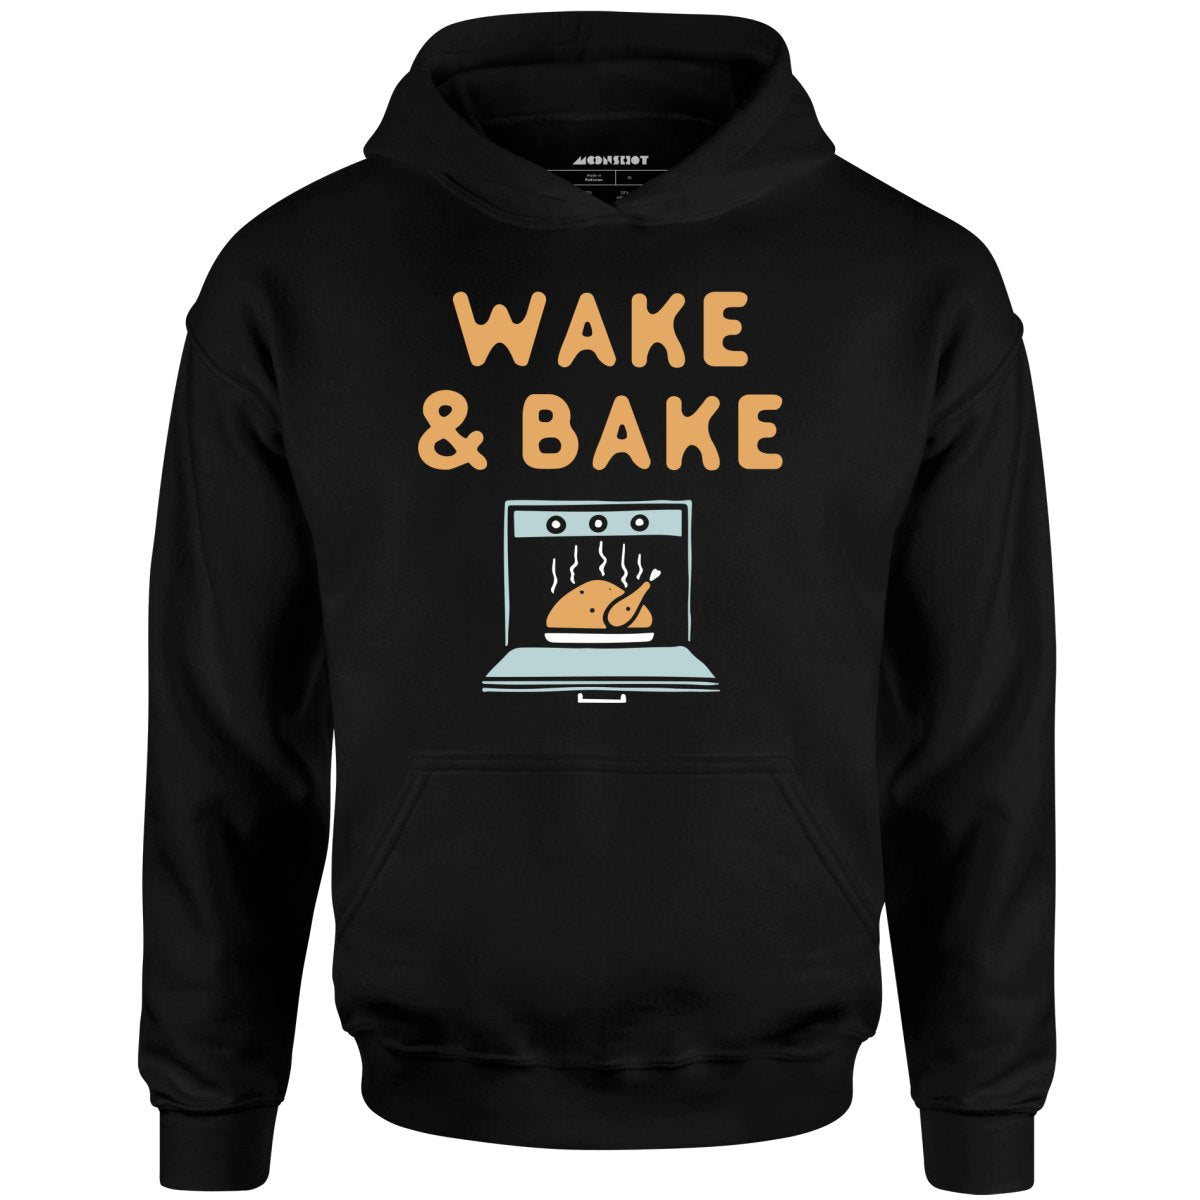 Wake & Bake - Unisex Hoodie